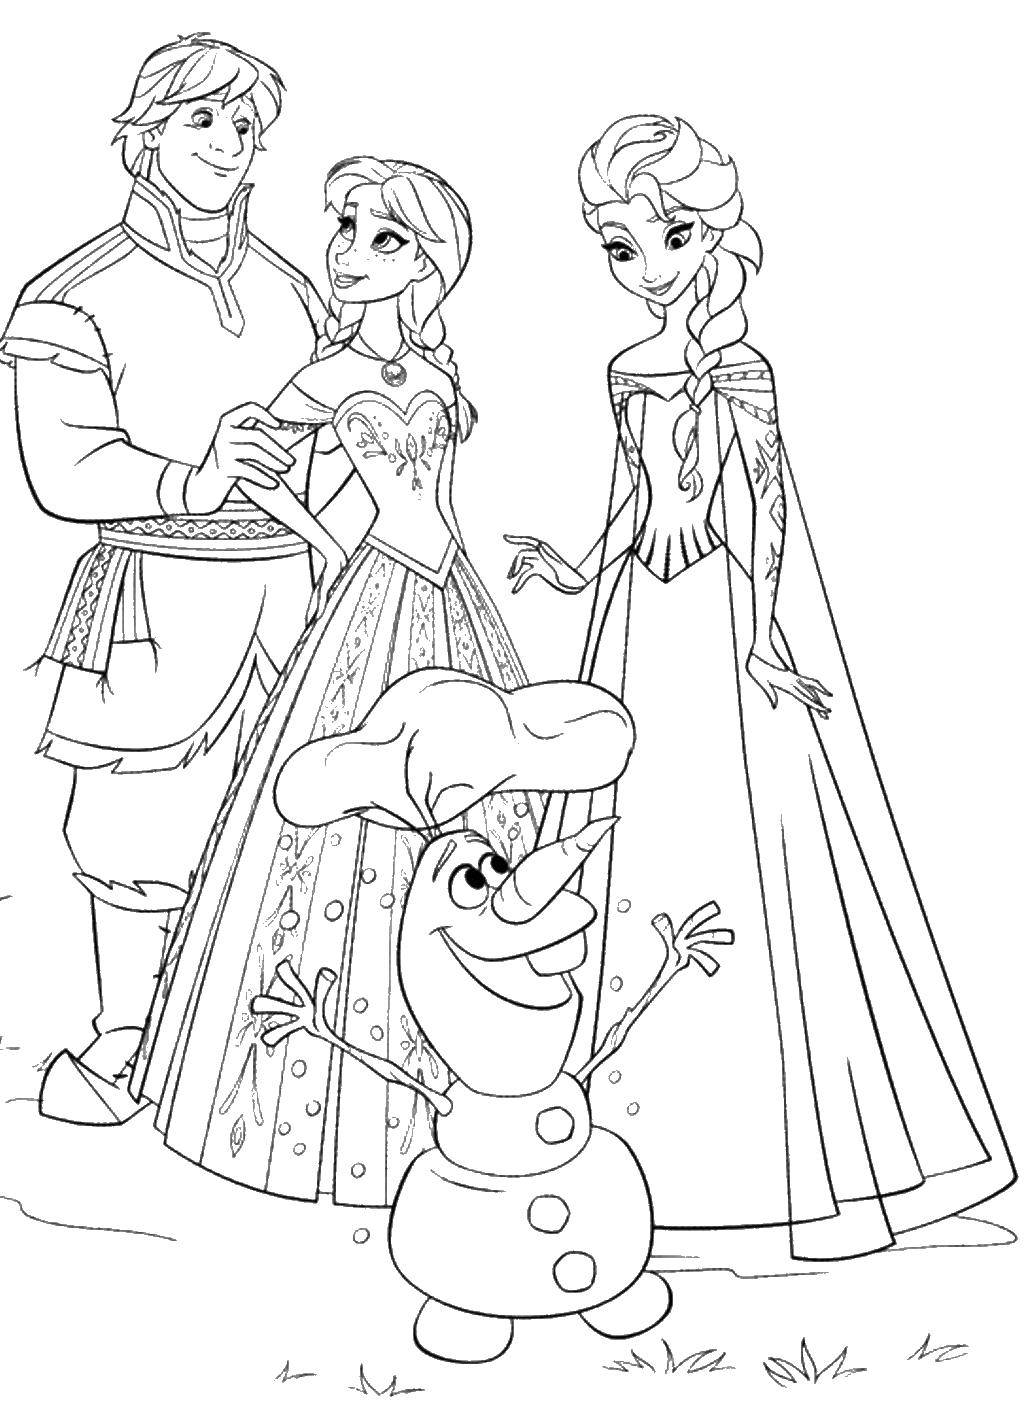 Coloring Cartoon characters cold heart . Category cartoons. Tags:  Disney, Elsa, frozen, Princess.